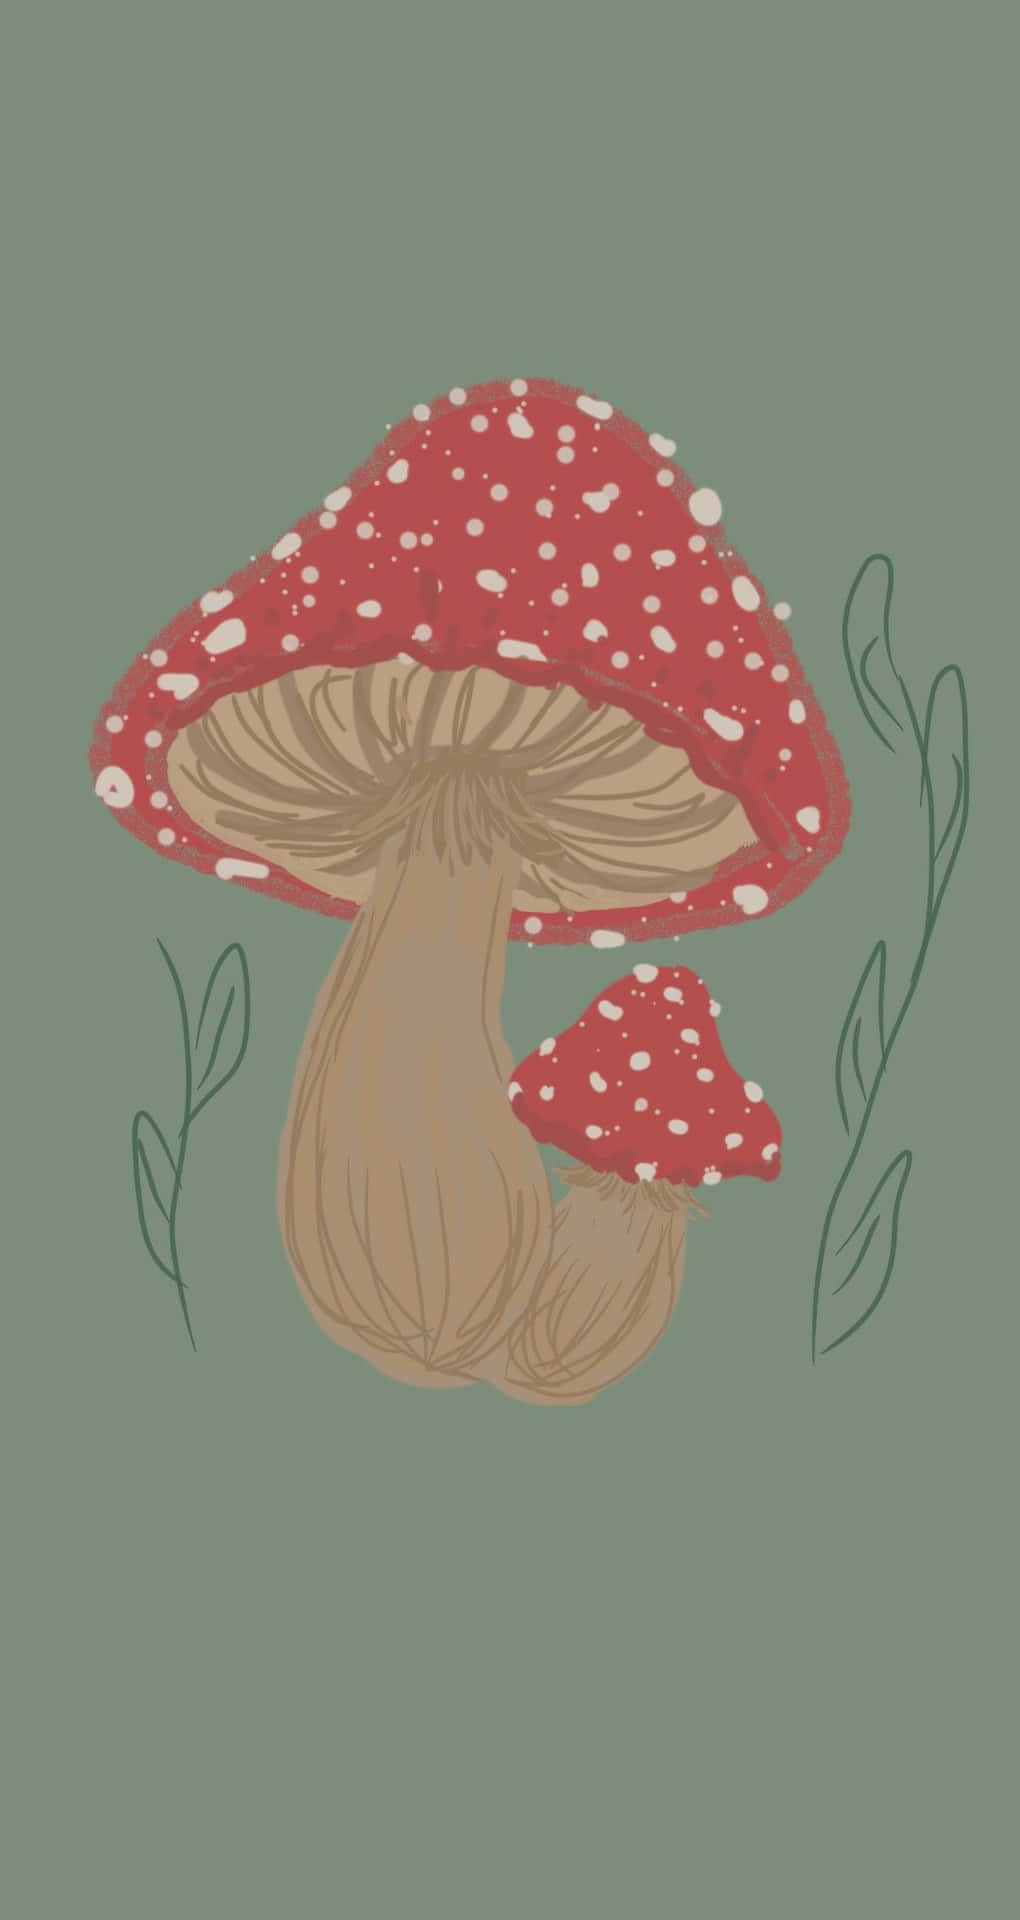 Mushroom Background Images  Free Download on Freepik